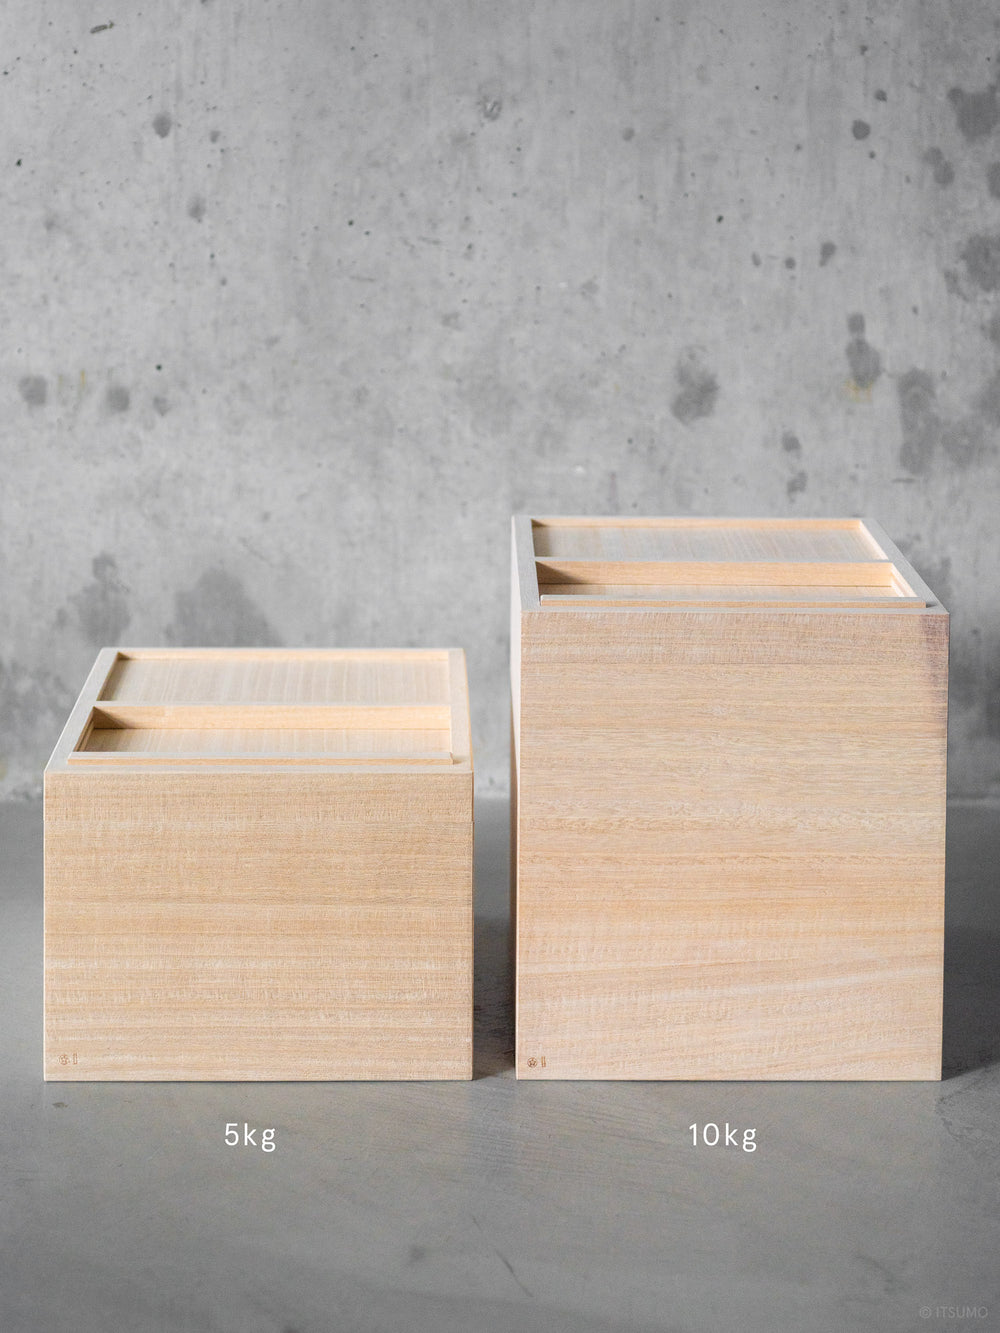 Azmaya Japanese rice storage boxes in 5 kg and 10 kg size